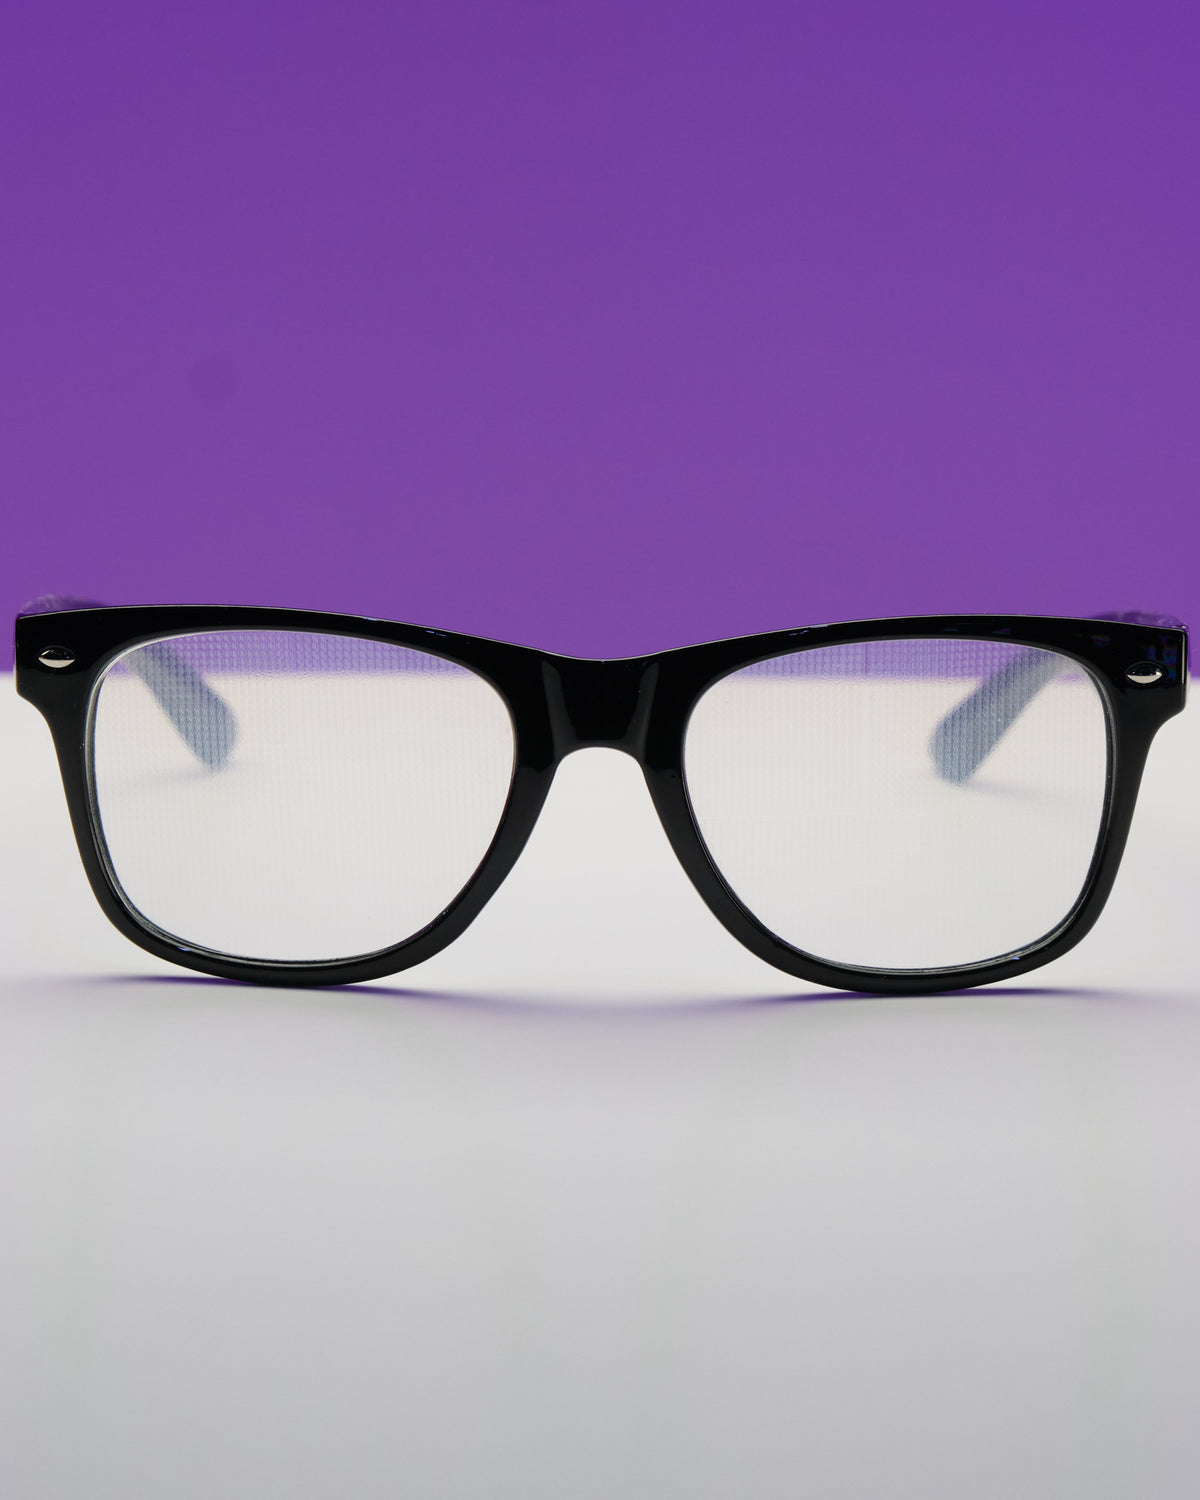 GloFX Spiral Diffraction Glasses - Rave Wonderland